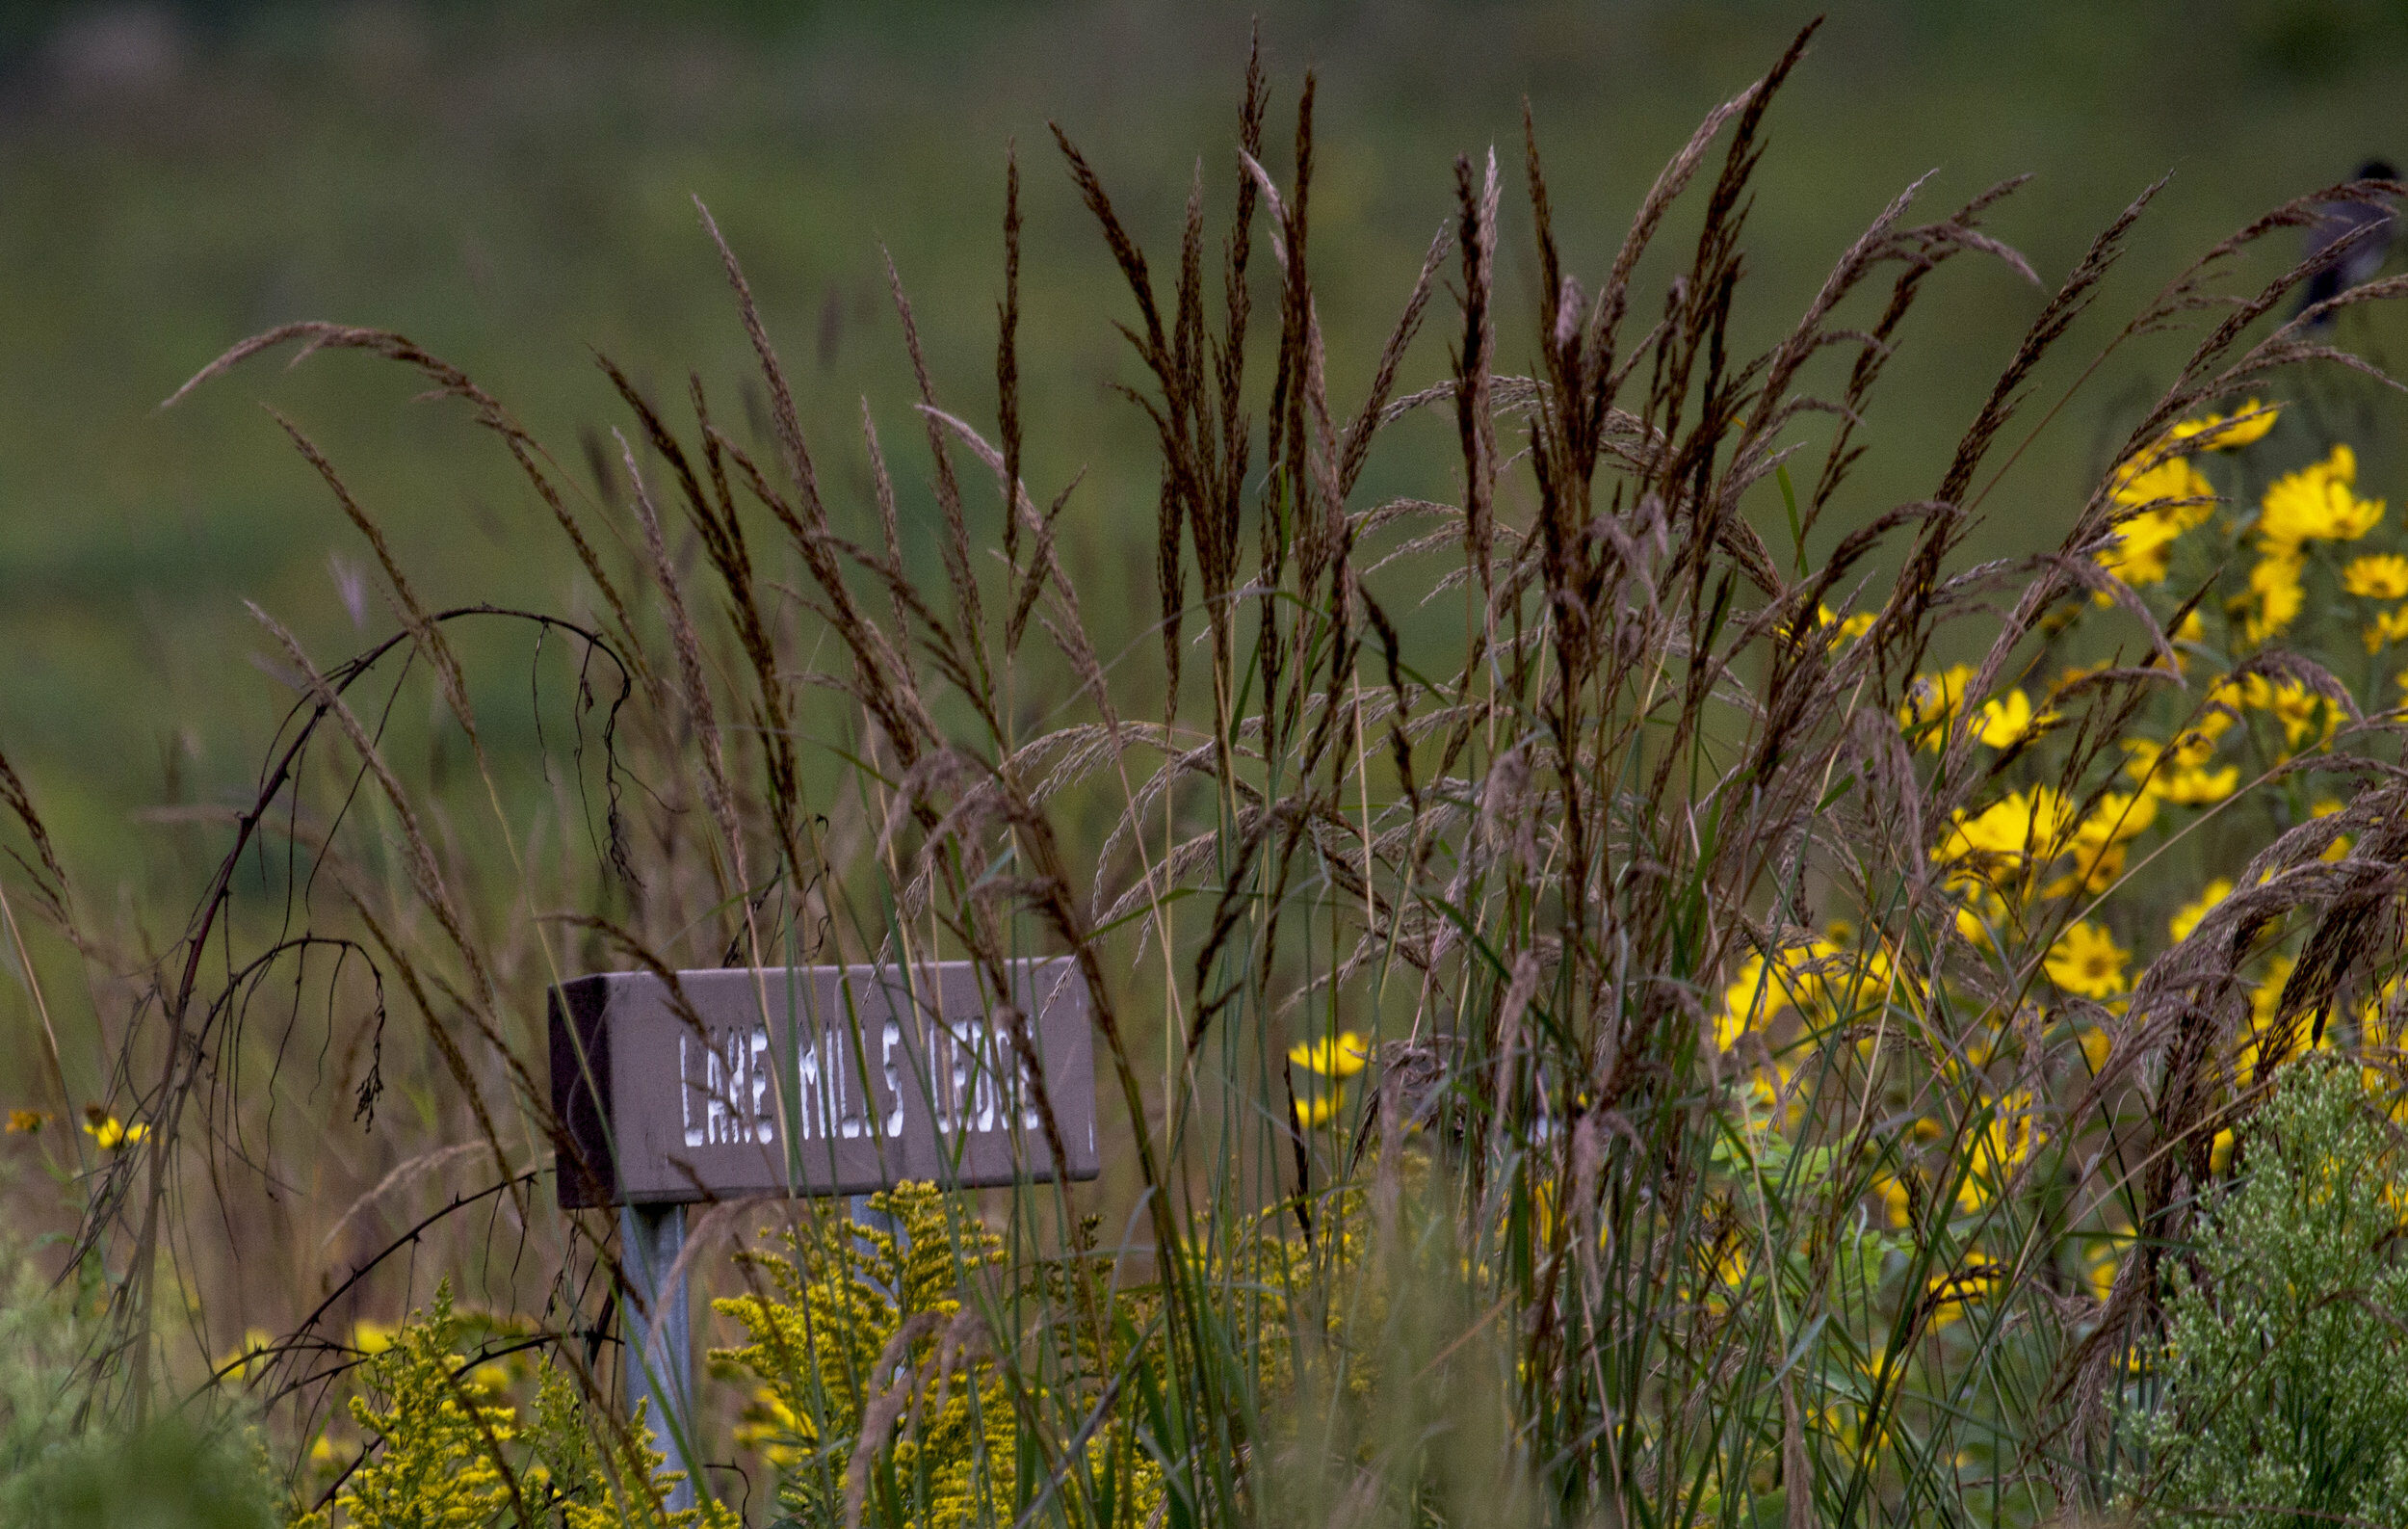 Lake Mills Ledge sign surrounded by vegetation